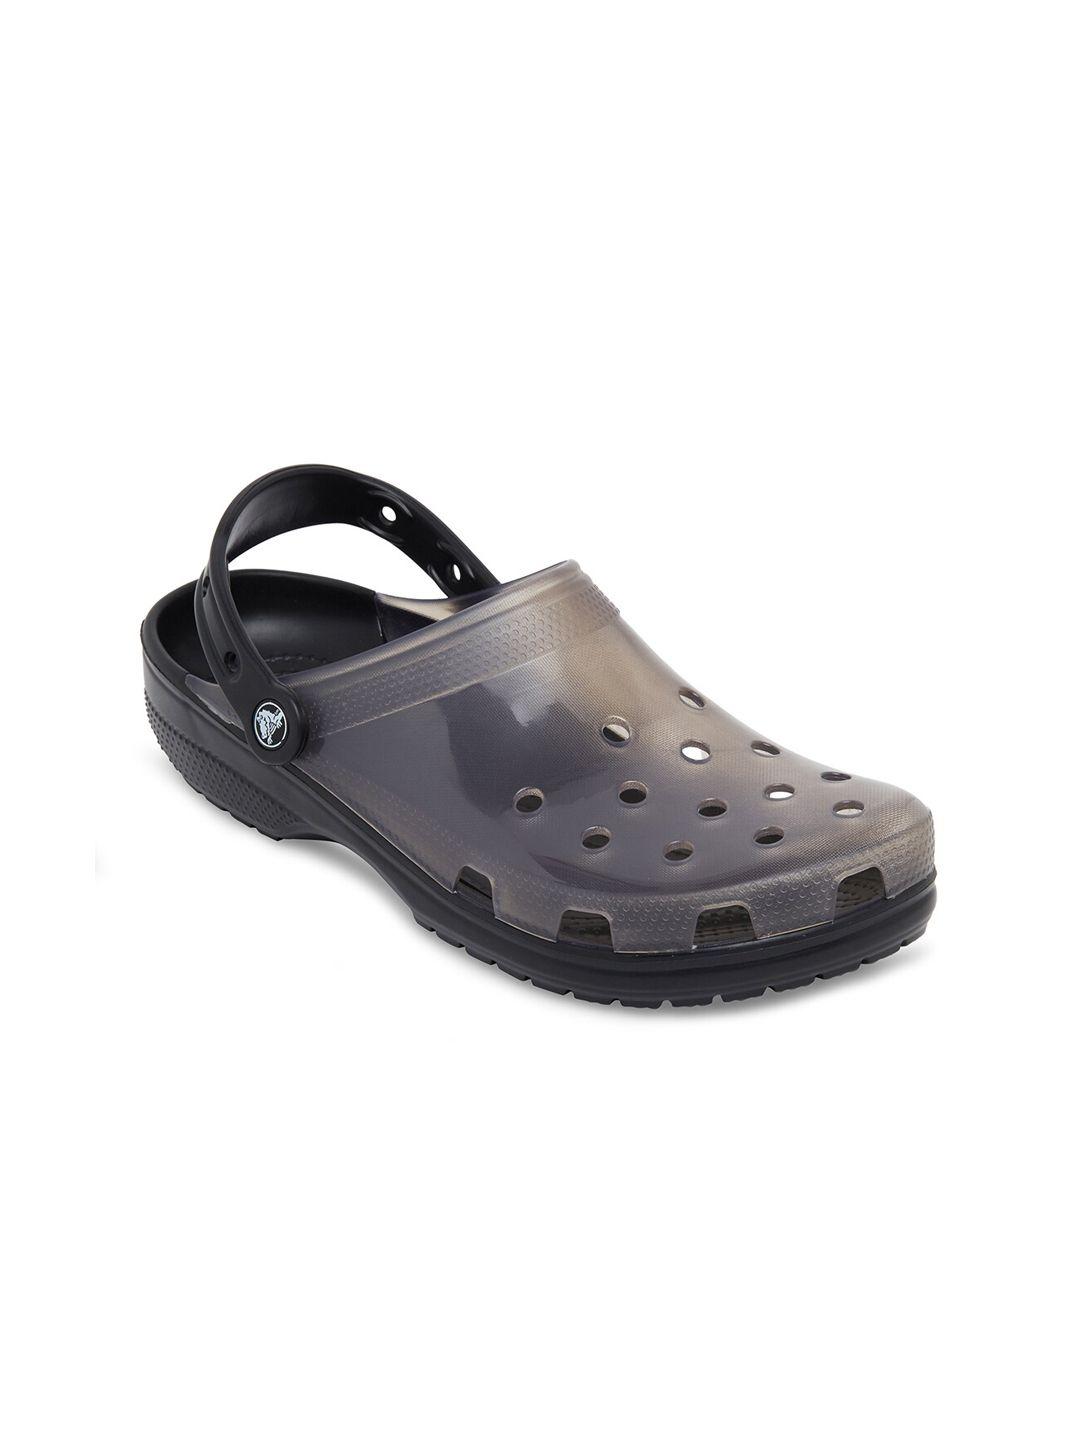 crocs classic unisex grey  black printed clogs sandals